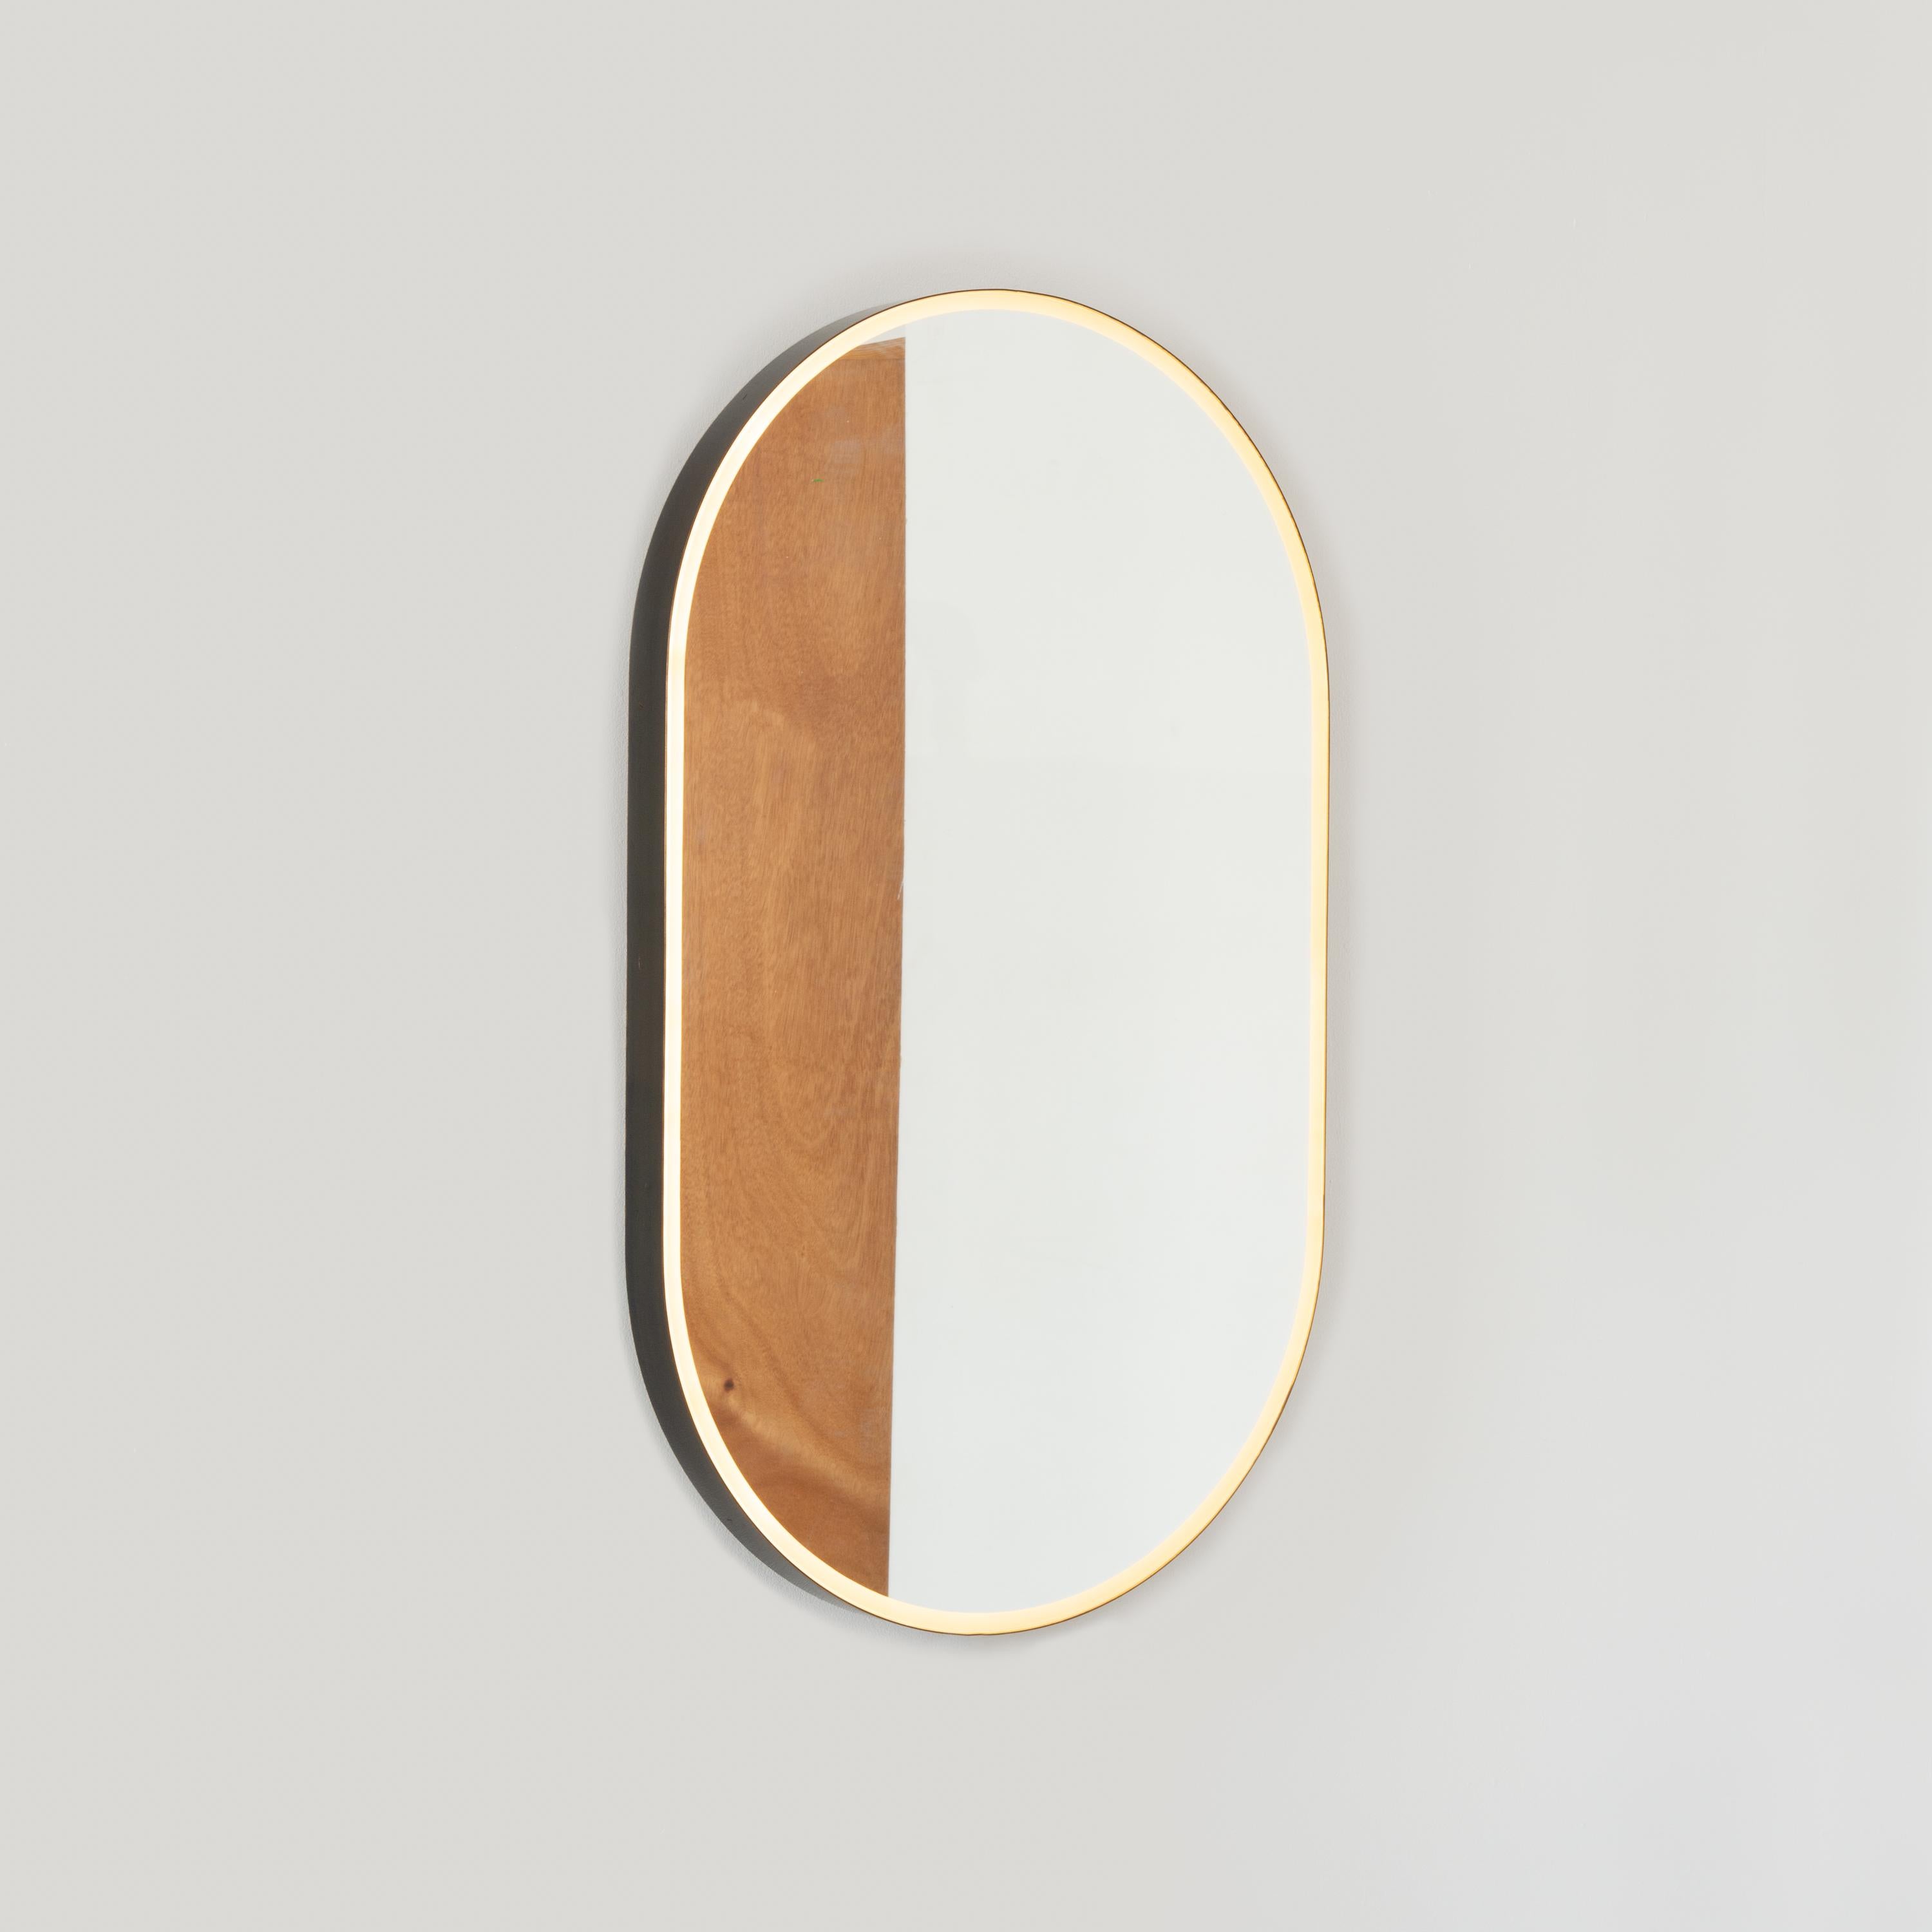 Organic Modern Capsula Illuminated Pill Shaped Customisable Mirror, Bronze Patina Frame, Large For Sale